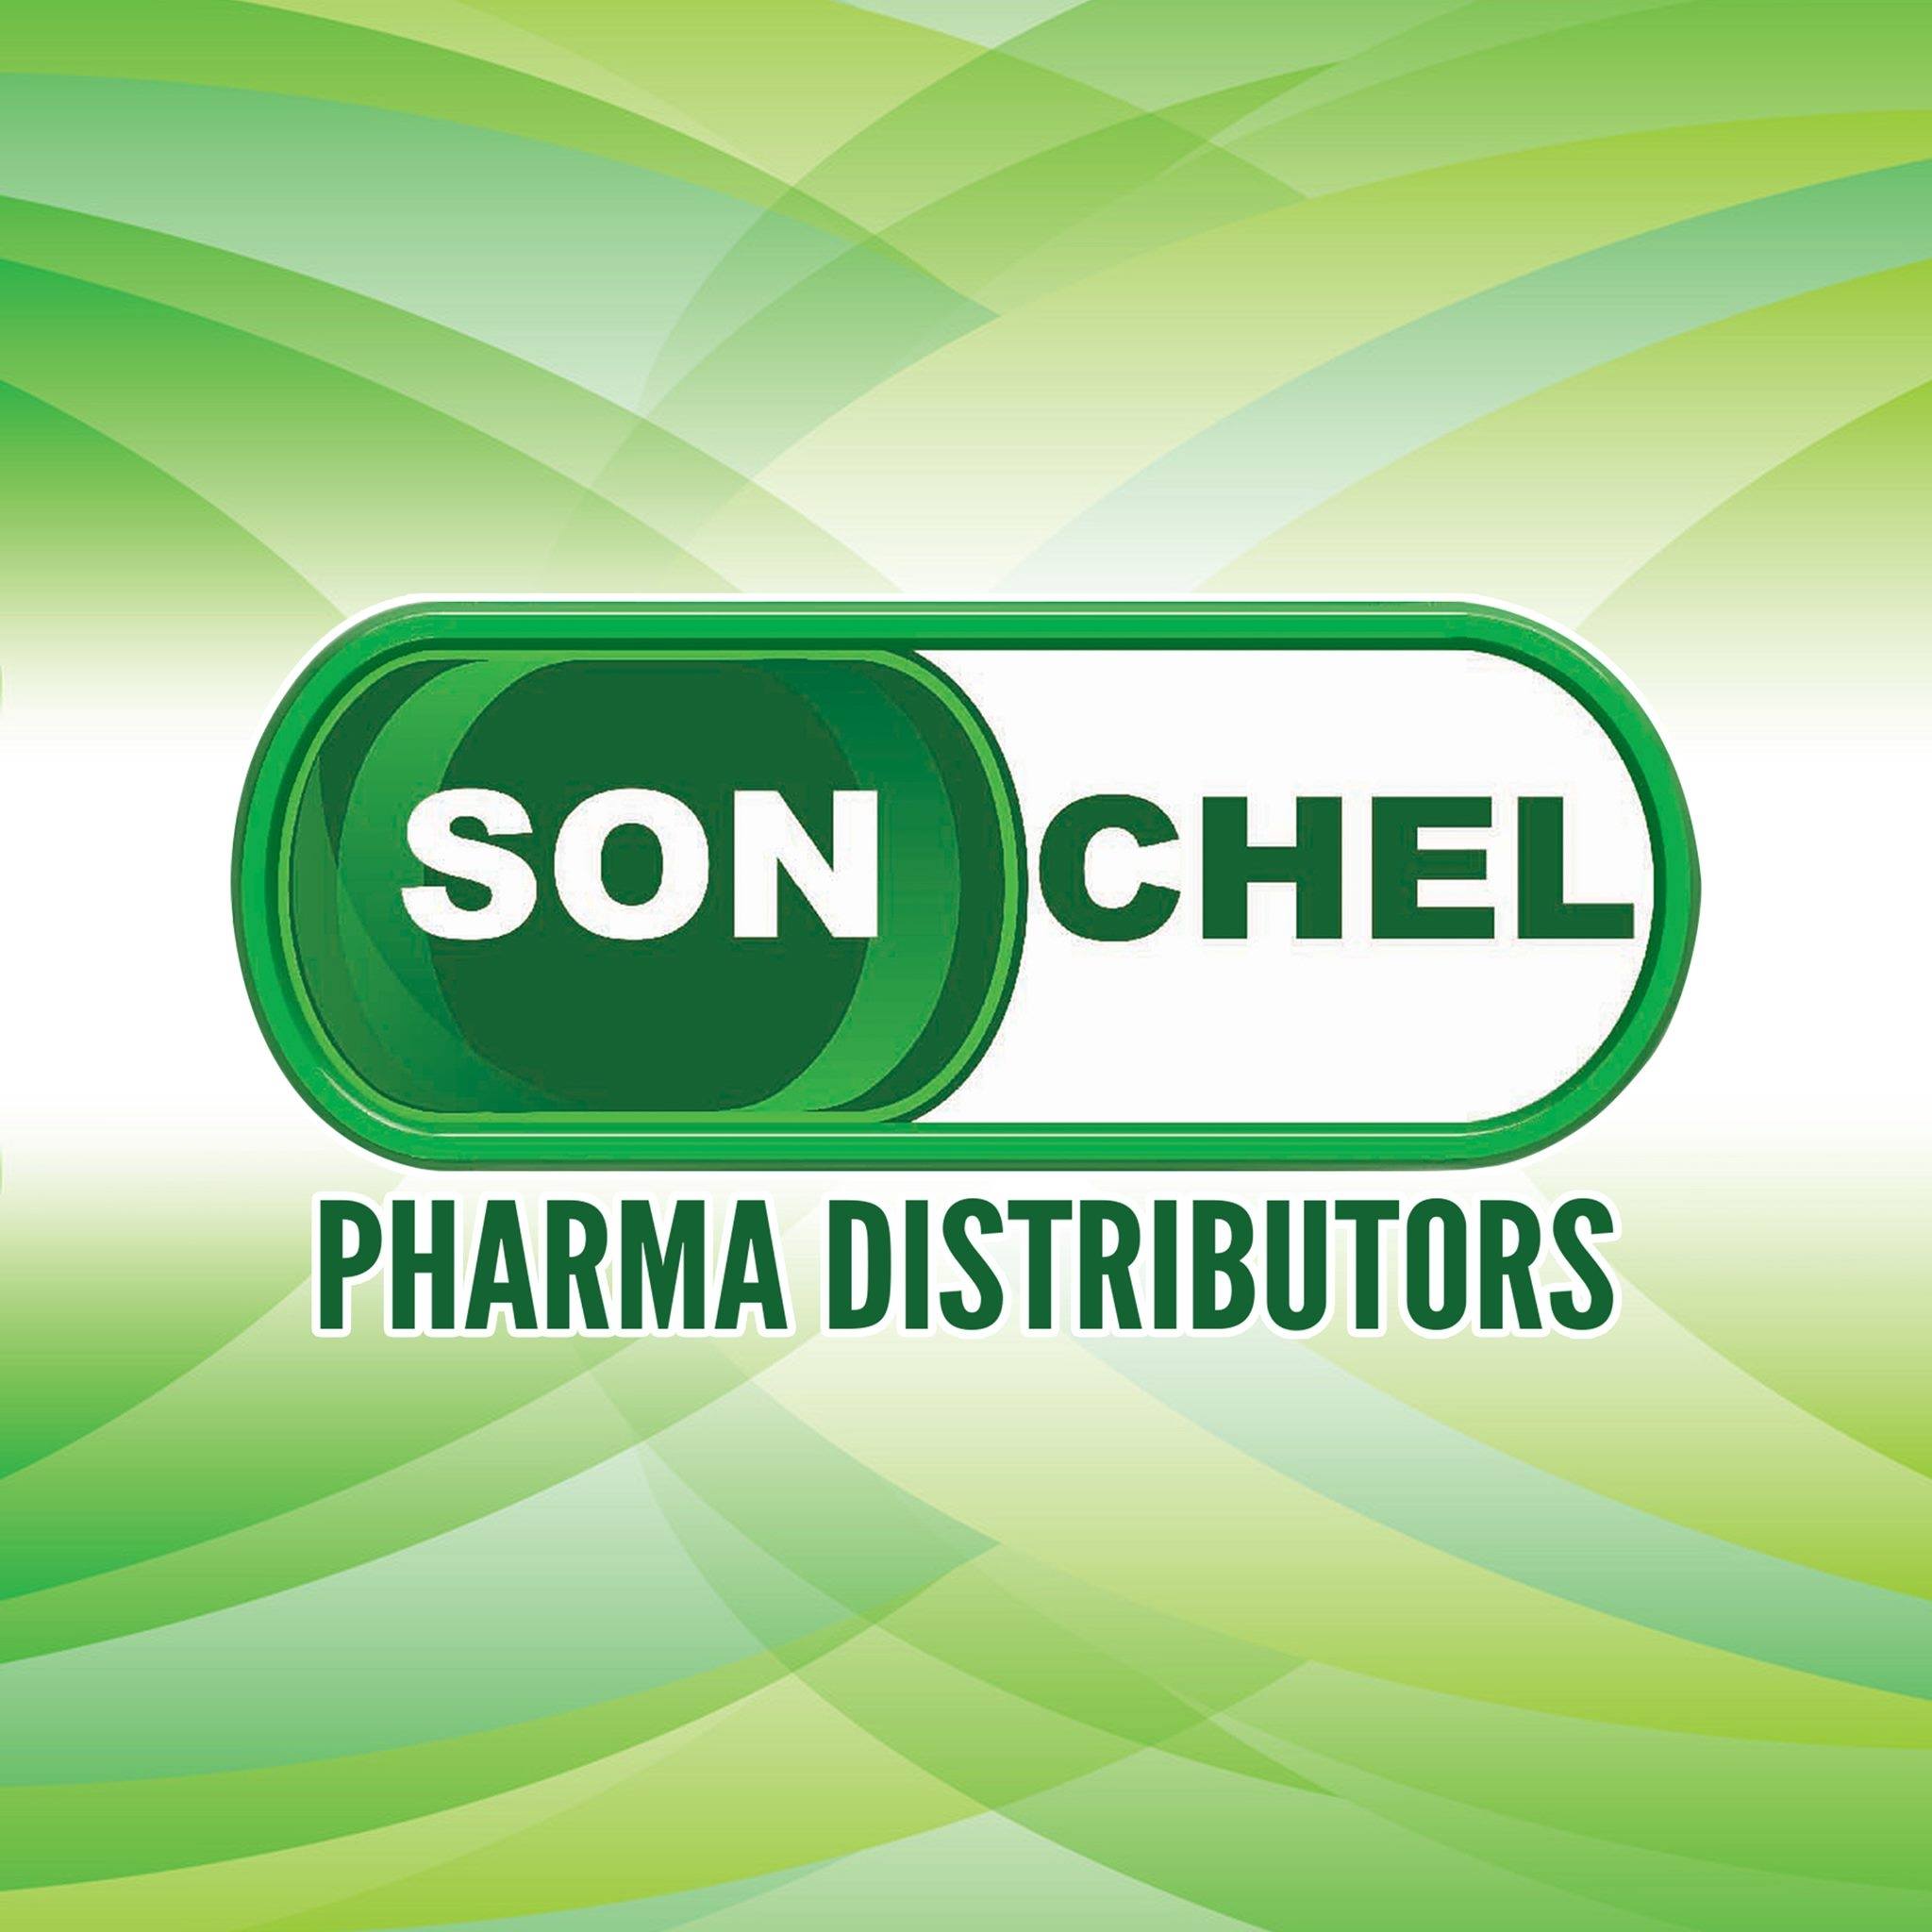 Year established Sonchel Pharma